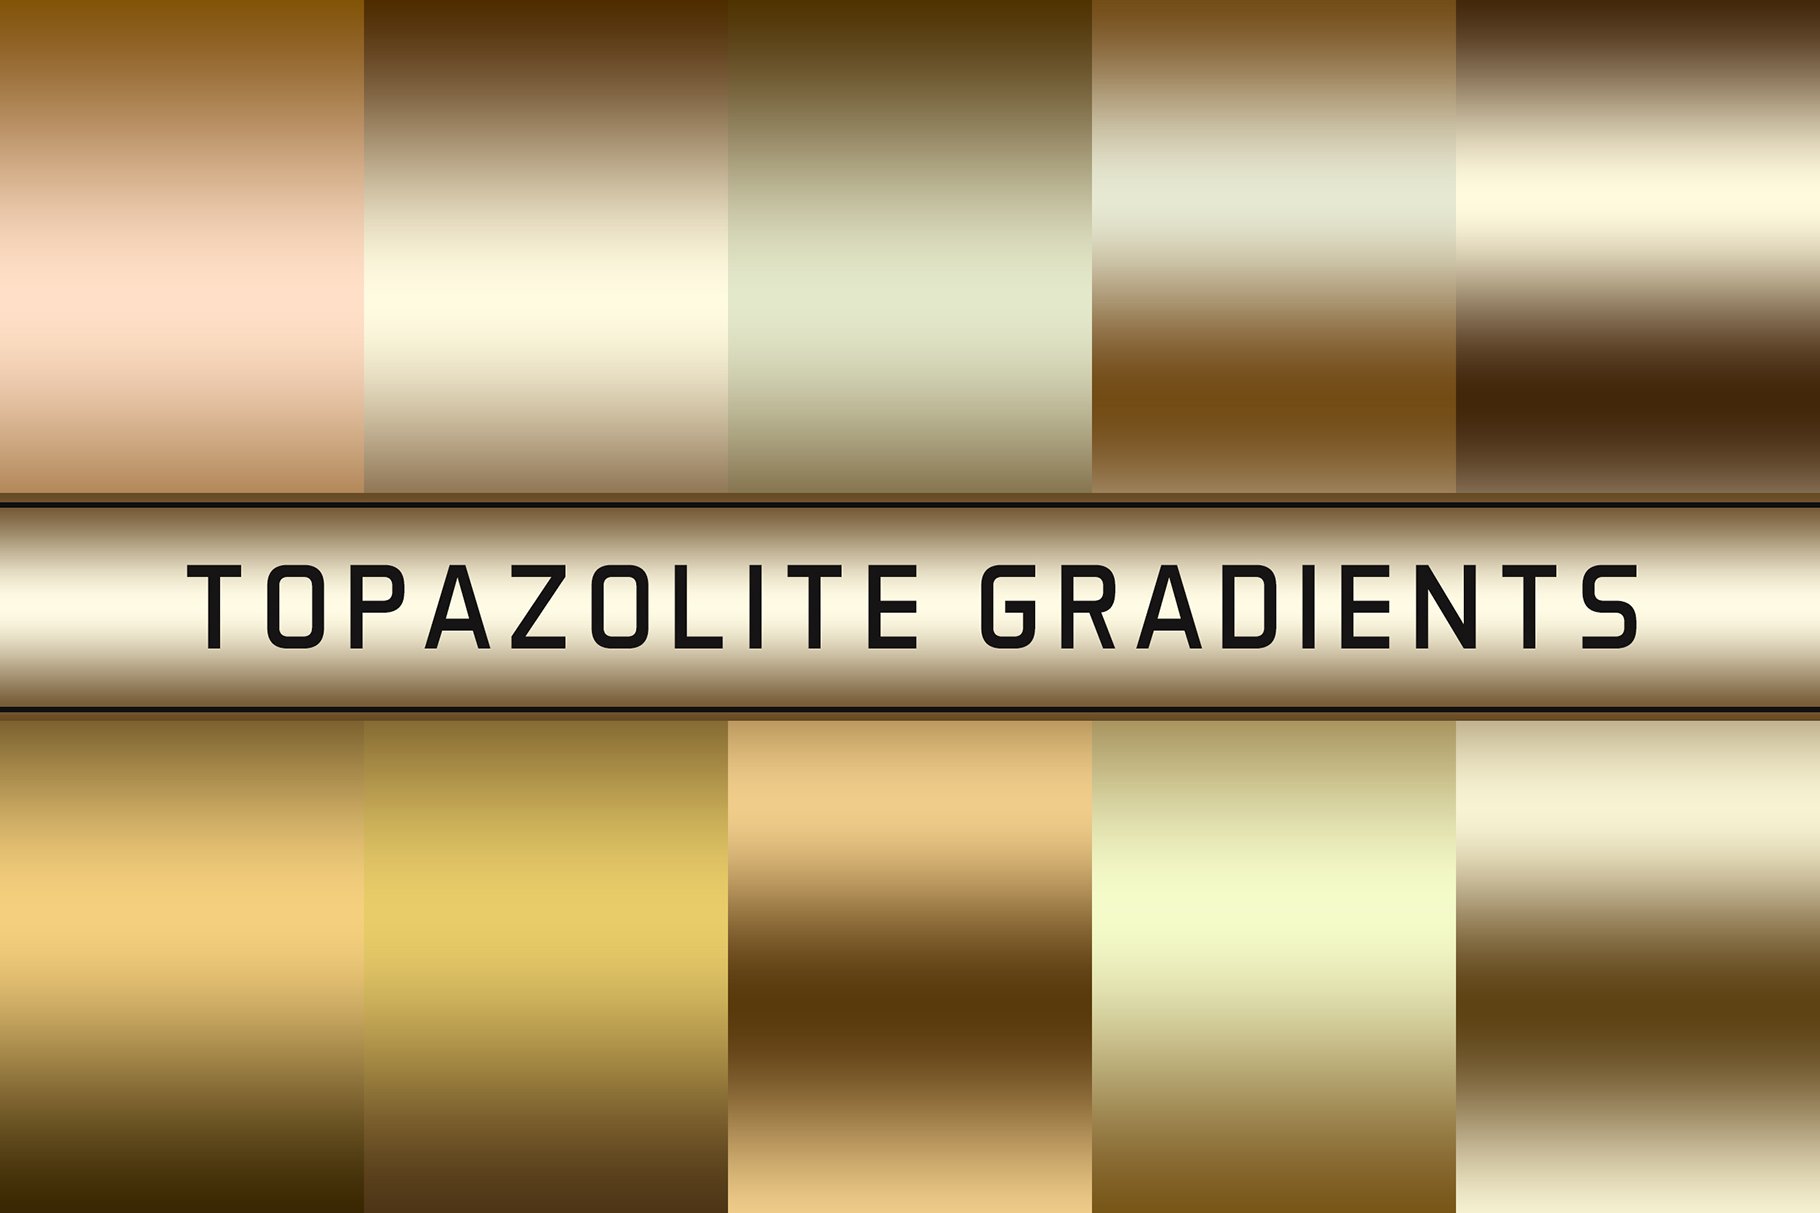 Topazolite Gradients cover image.